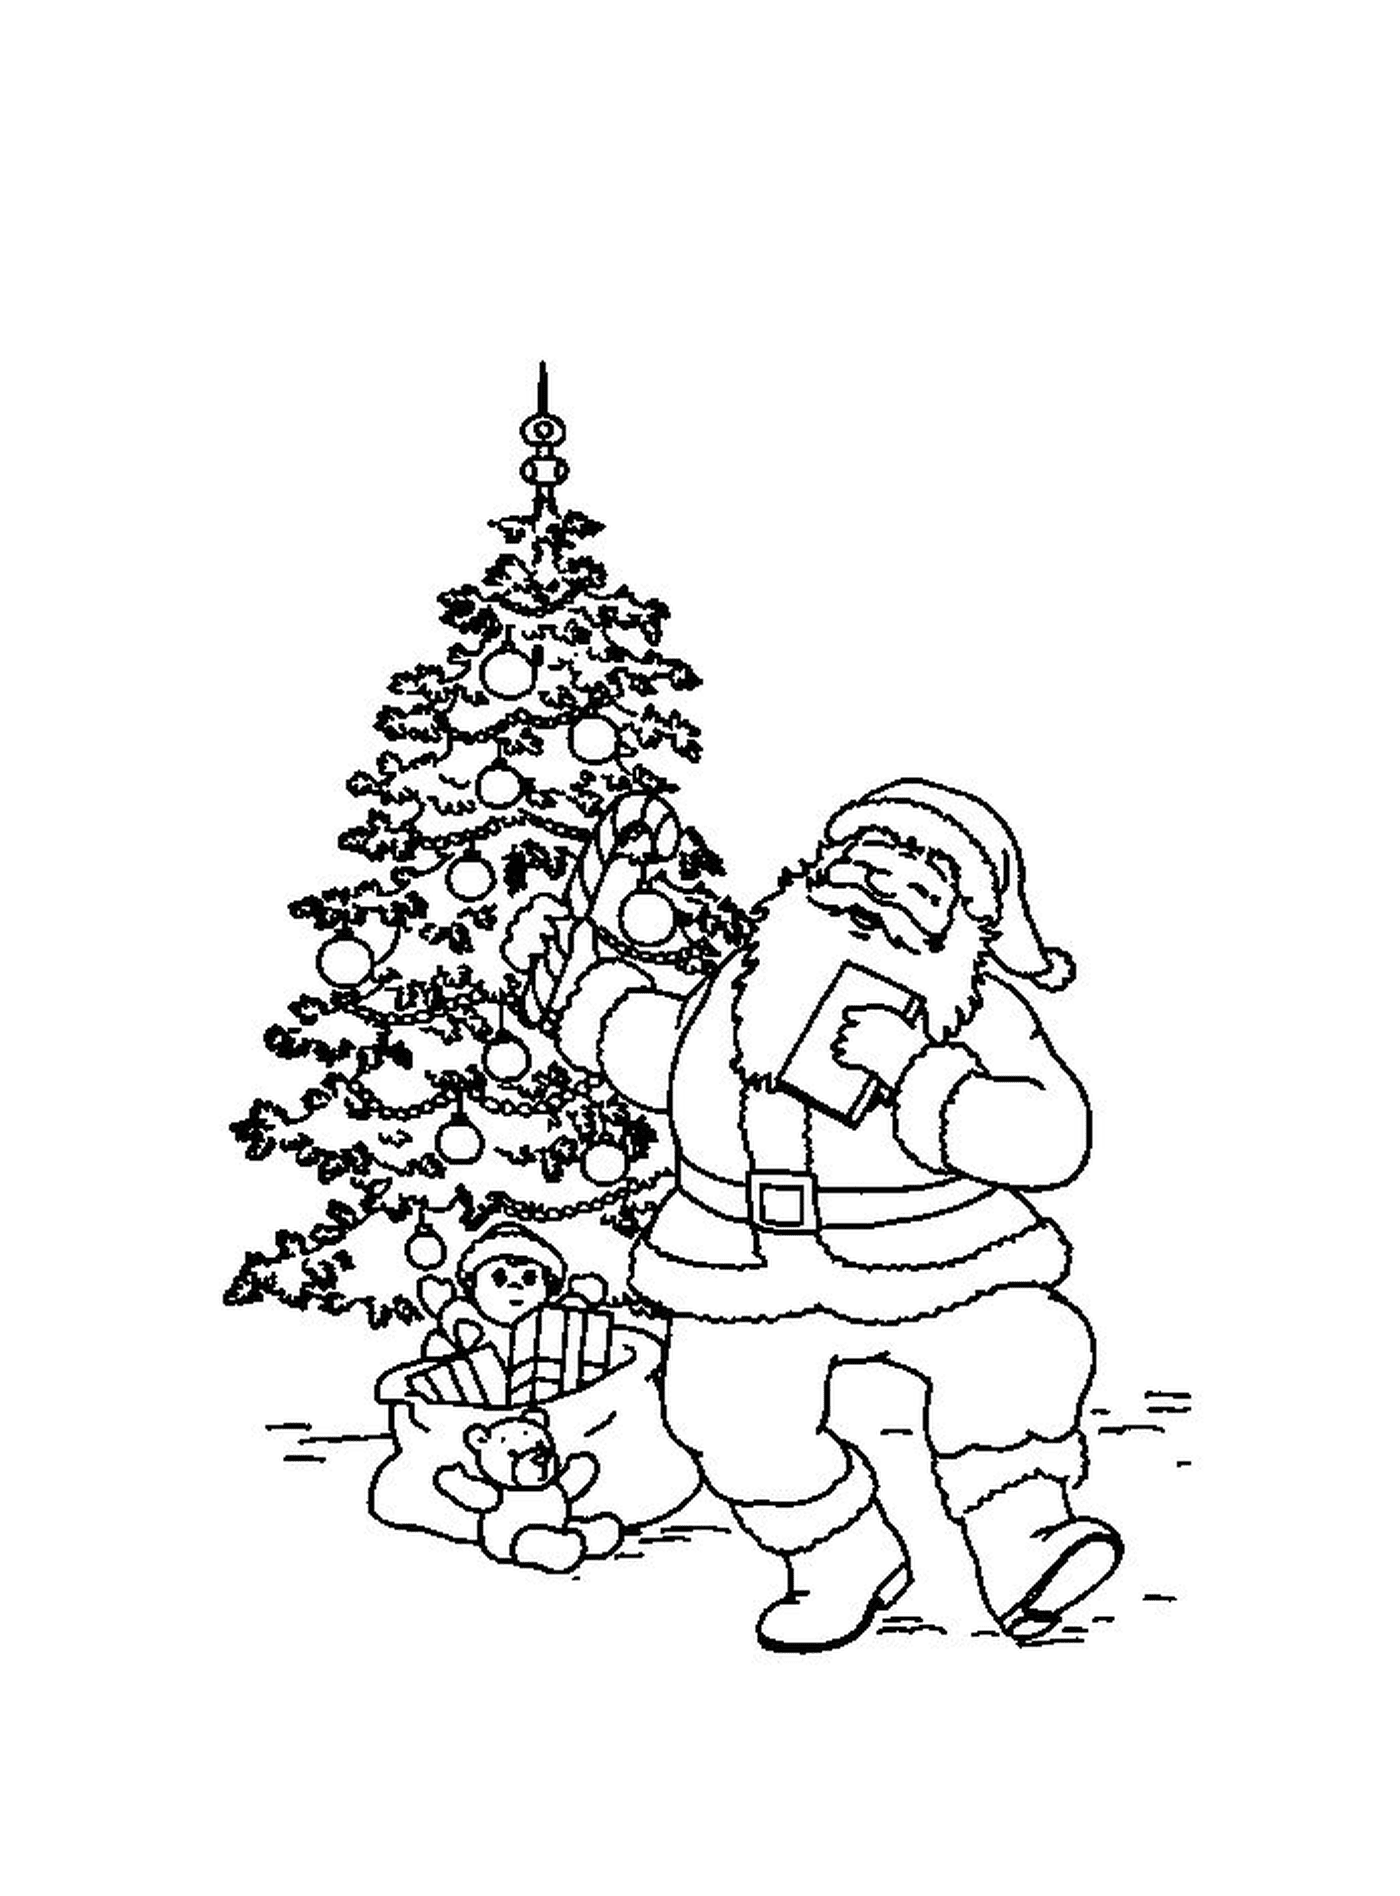  Santa dancing with a Christmas tree 